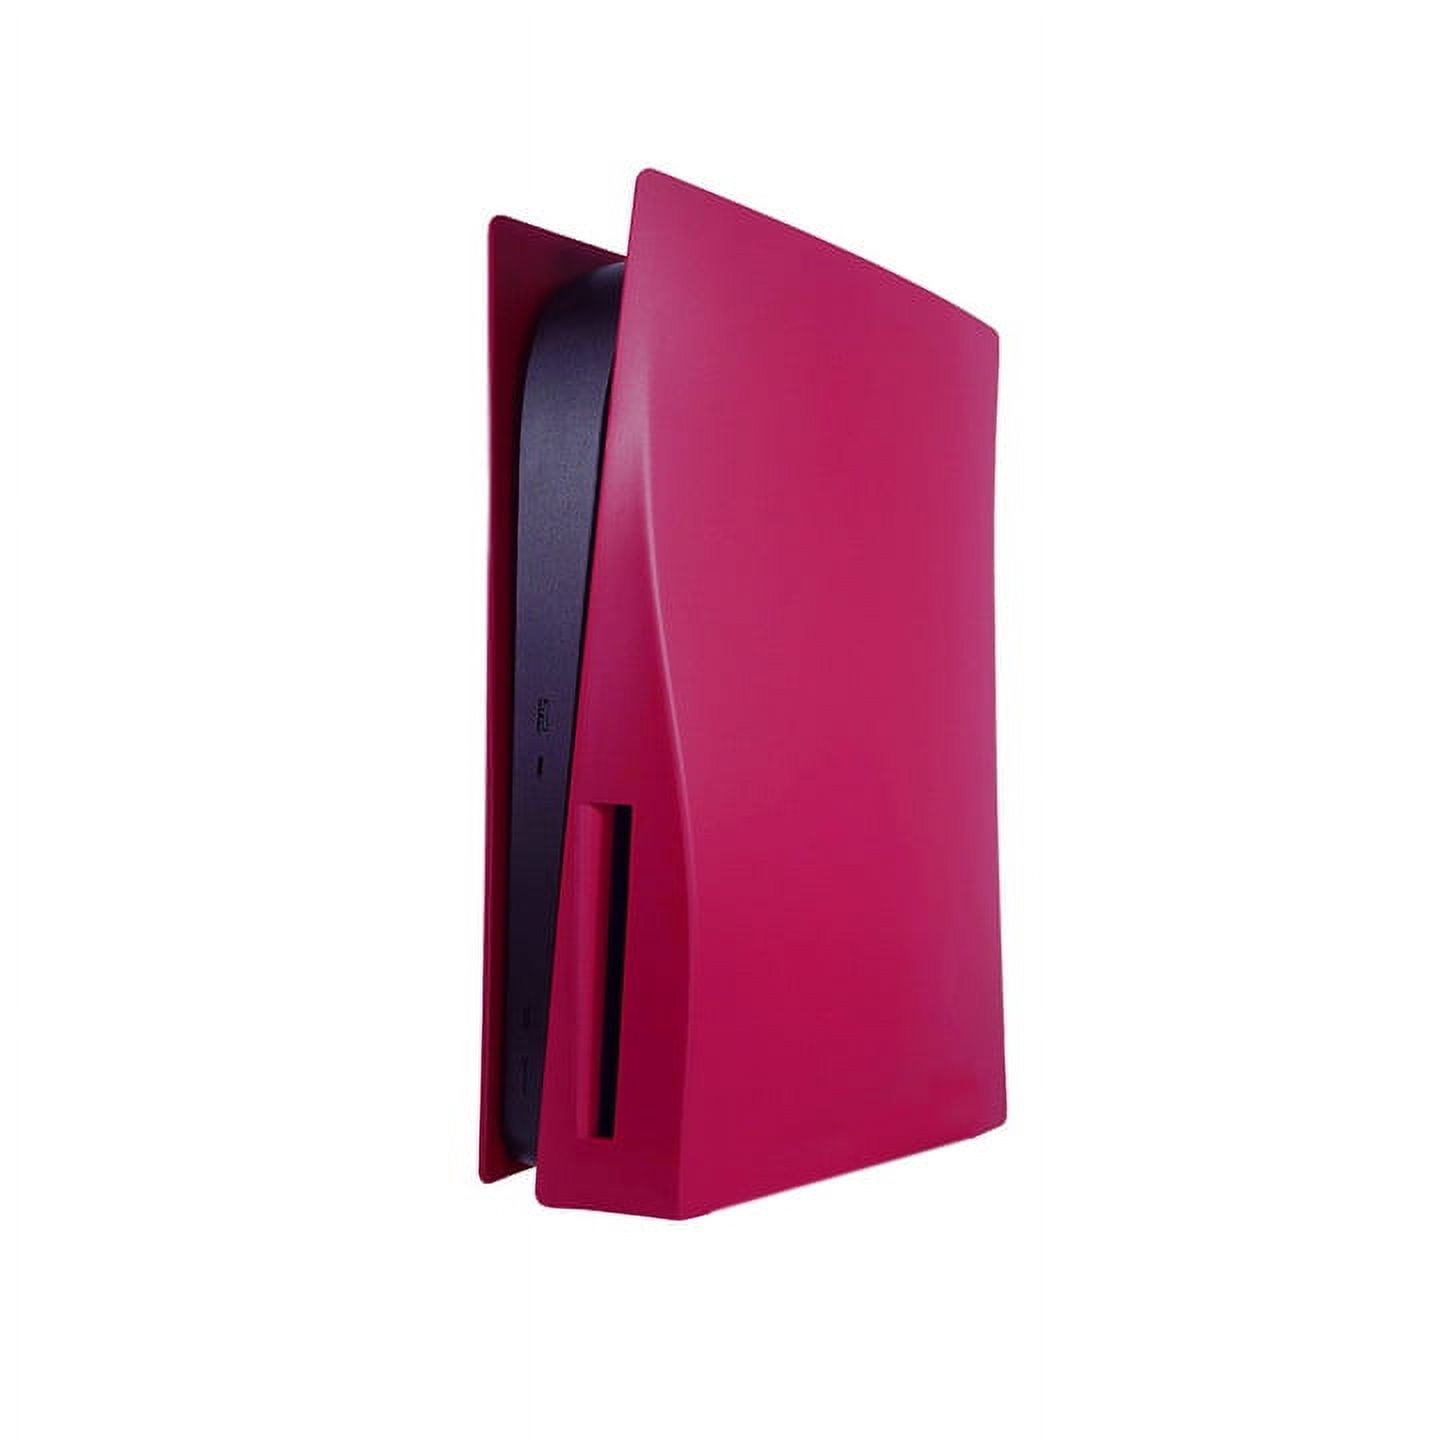 Comprar Carcasa Digital Cover Nova Pink PlayStation 5 · Sony · Hipercor